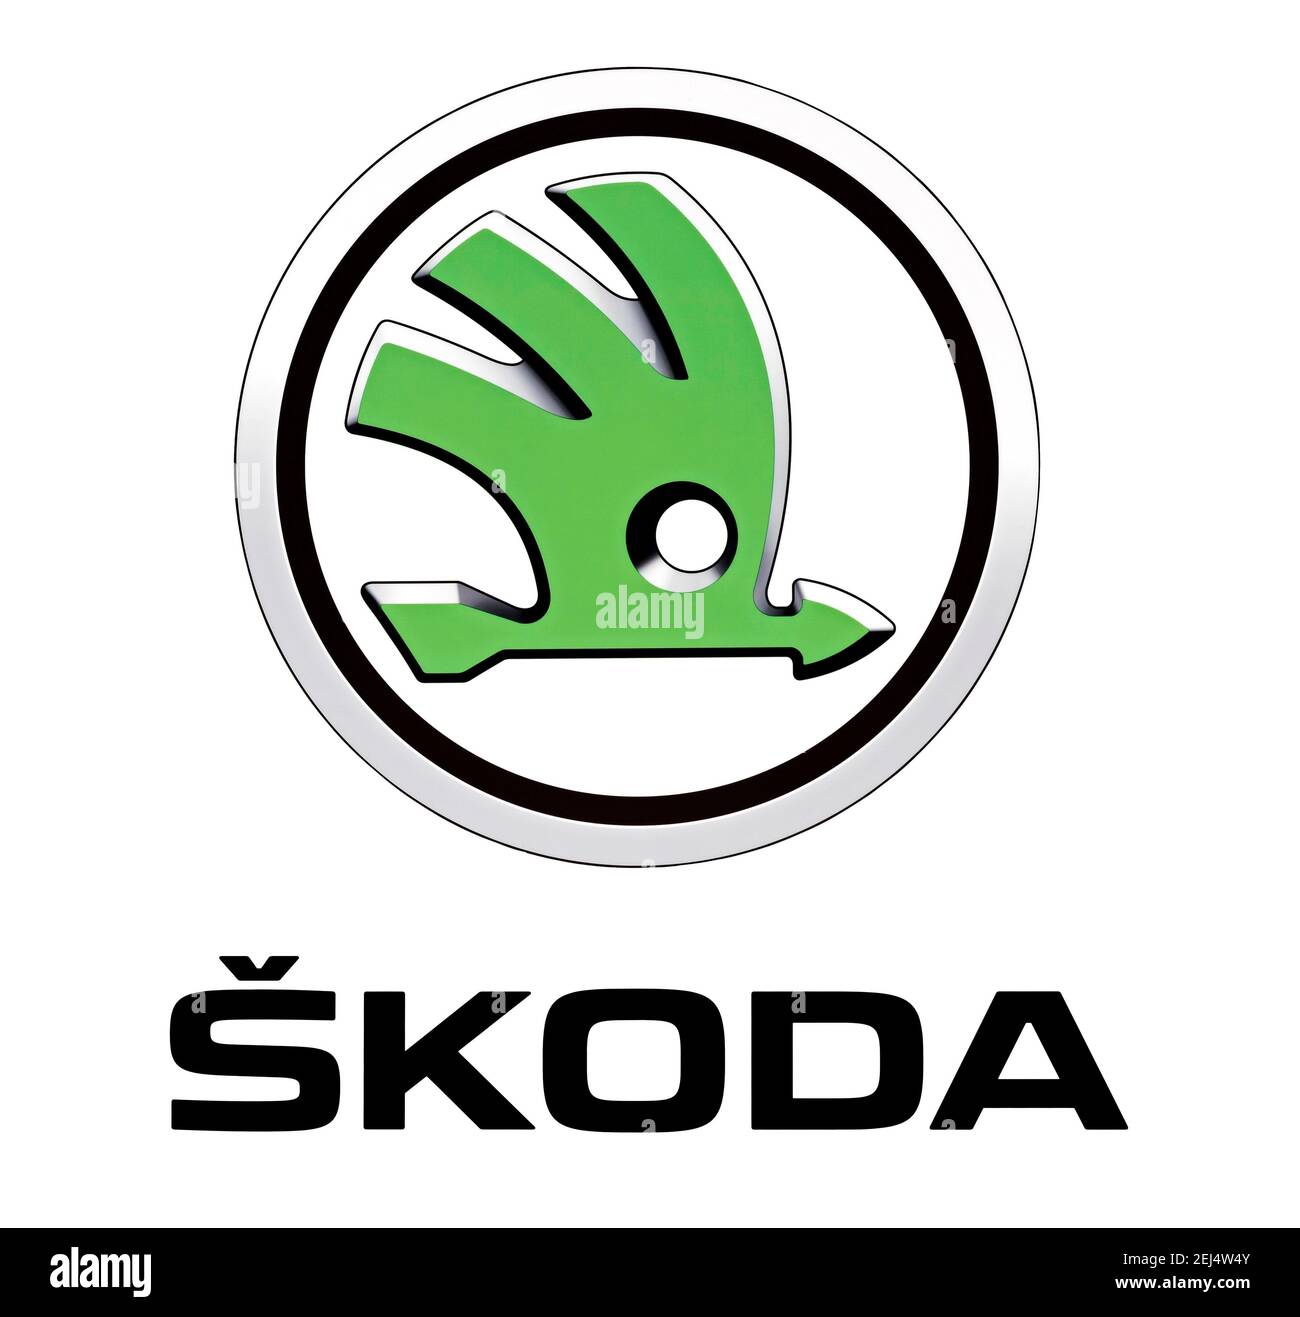 https://c8.alamy.com/comp/2EJ4W4Y/logo-of-the-car-brand-skoda-free-space-on-white-background-2EJ4W4Y.jpg